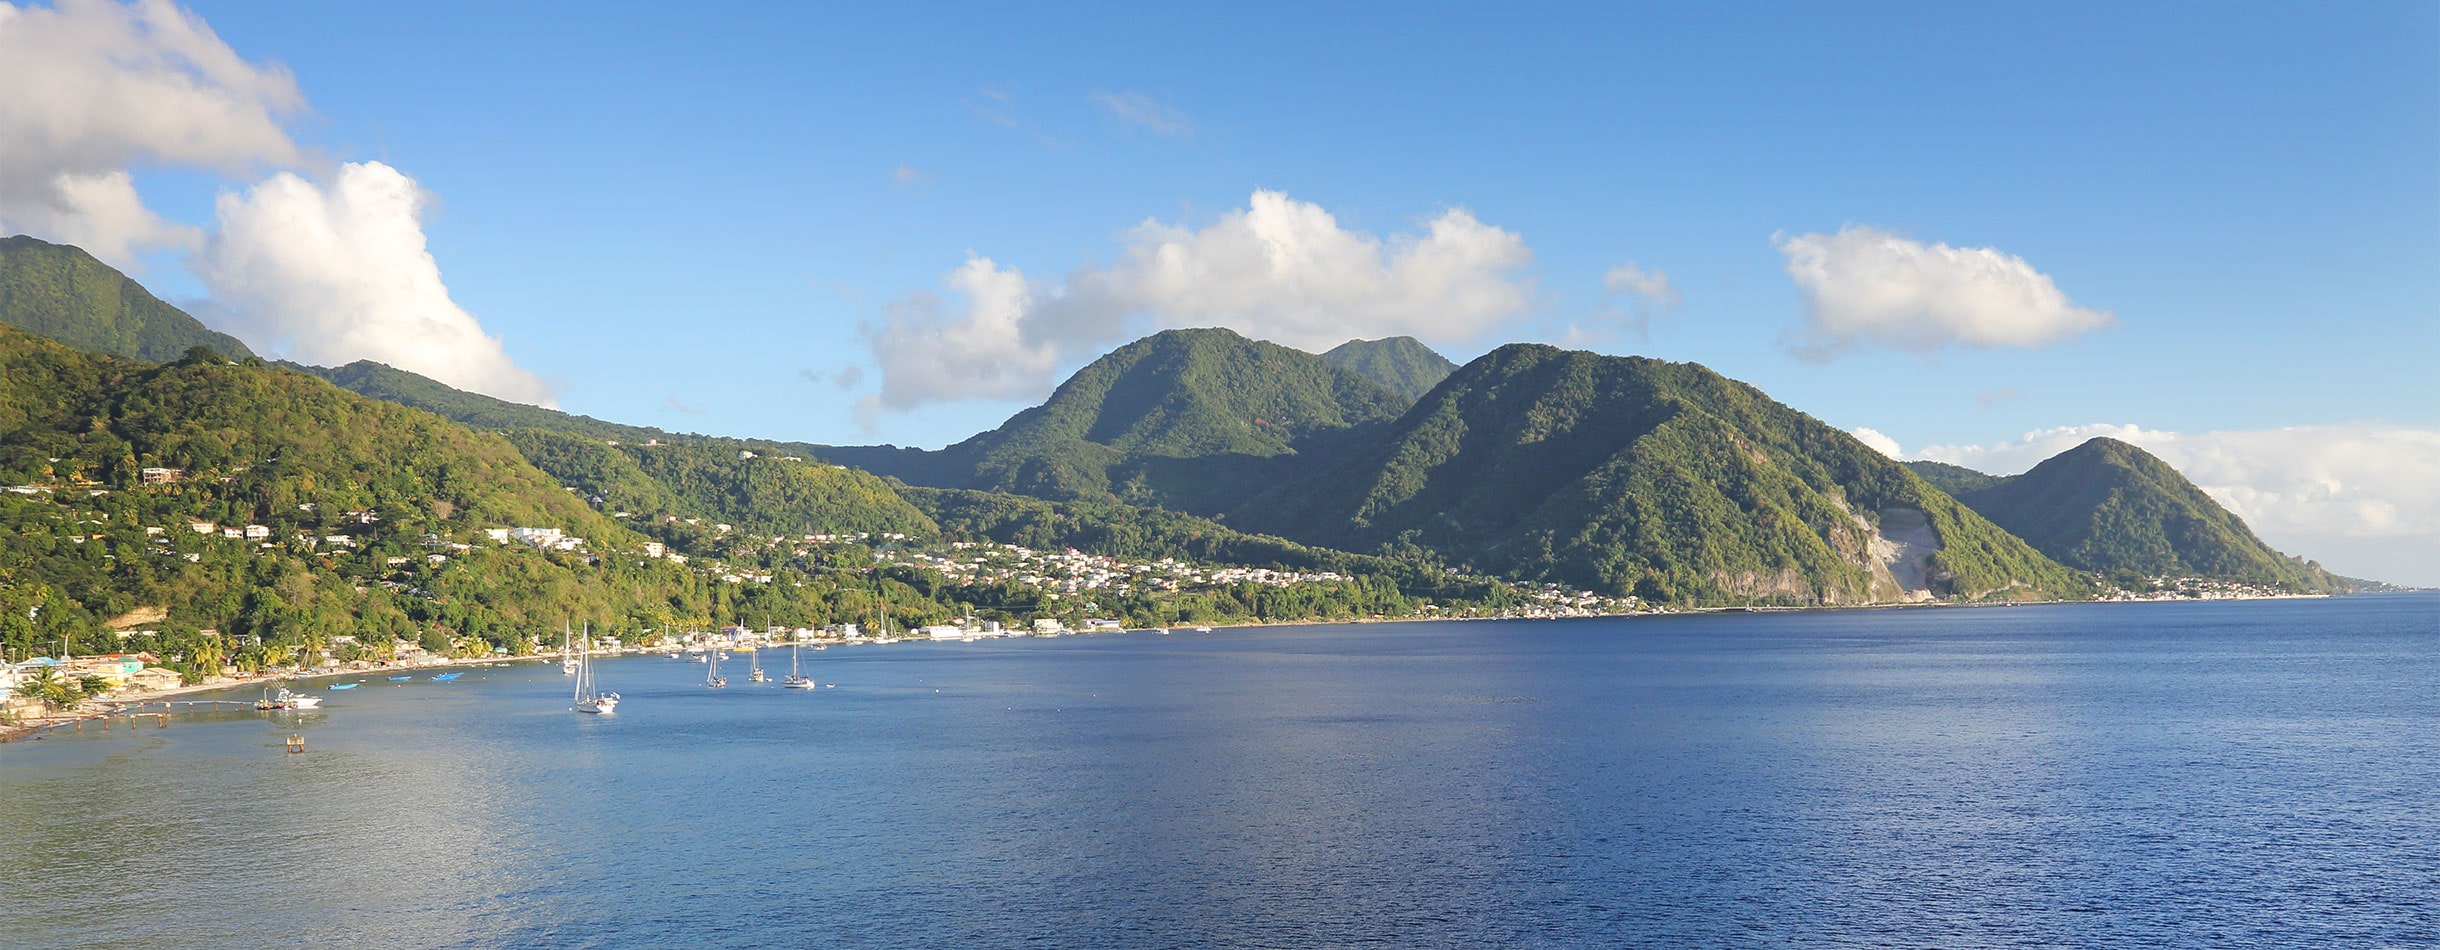 Stunning landscape of Roseau, Dominica